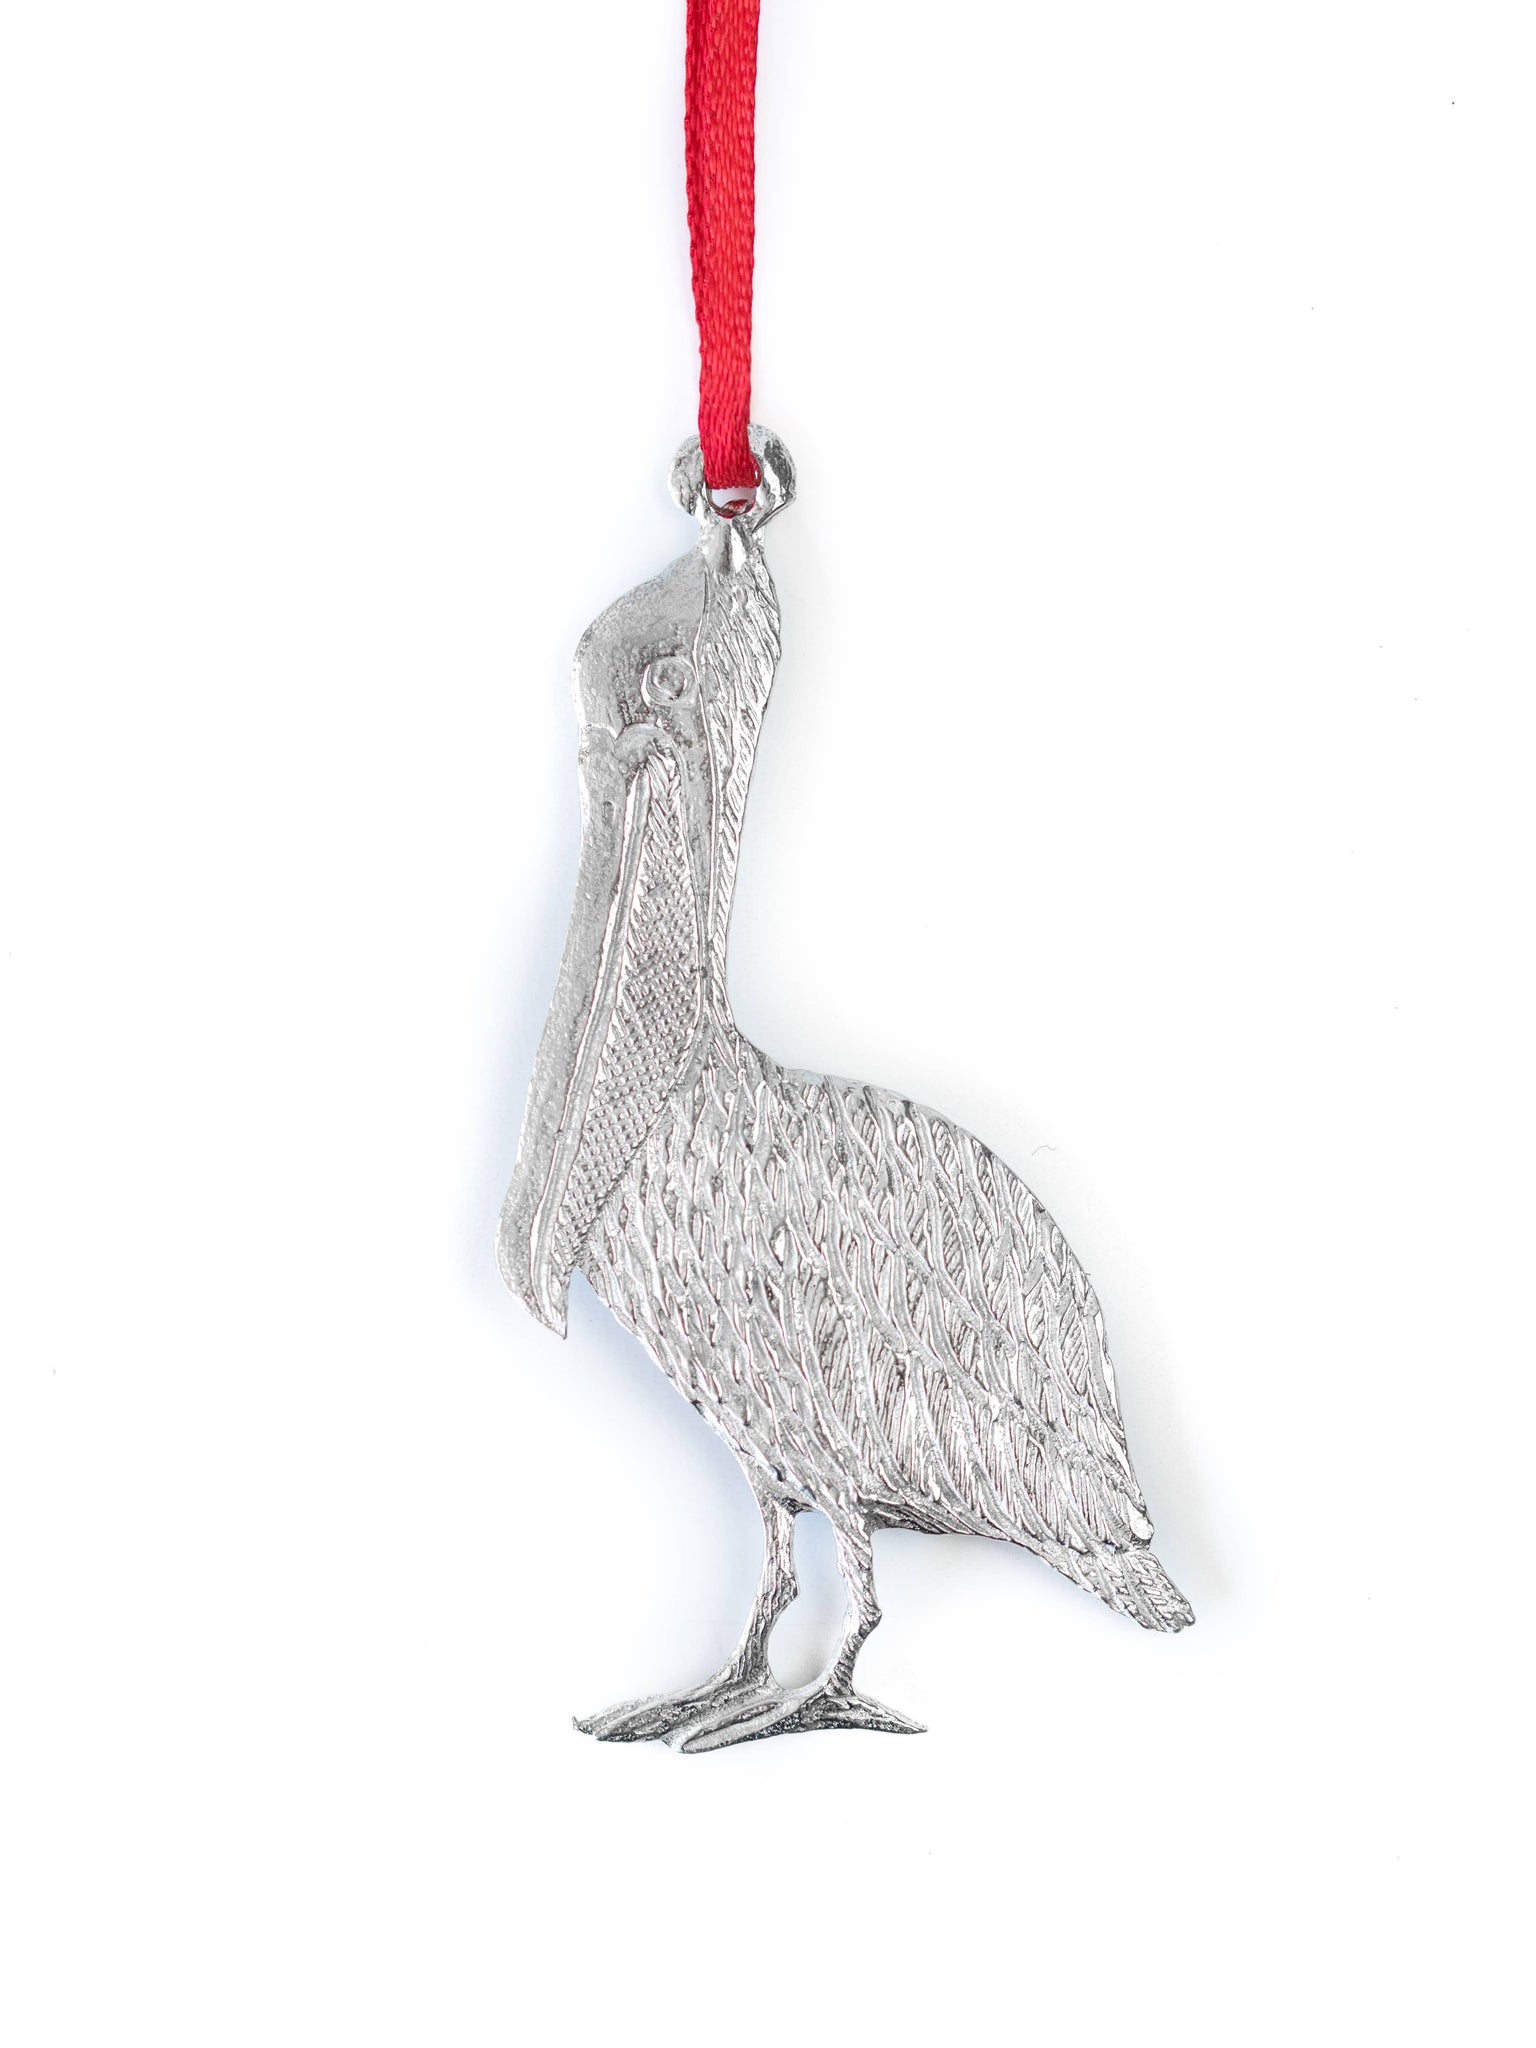 Louisiana Christmas Ornament - Pelican - Alligator - Symbols: Pelican